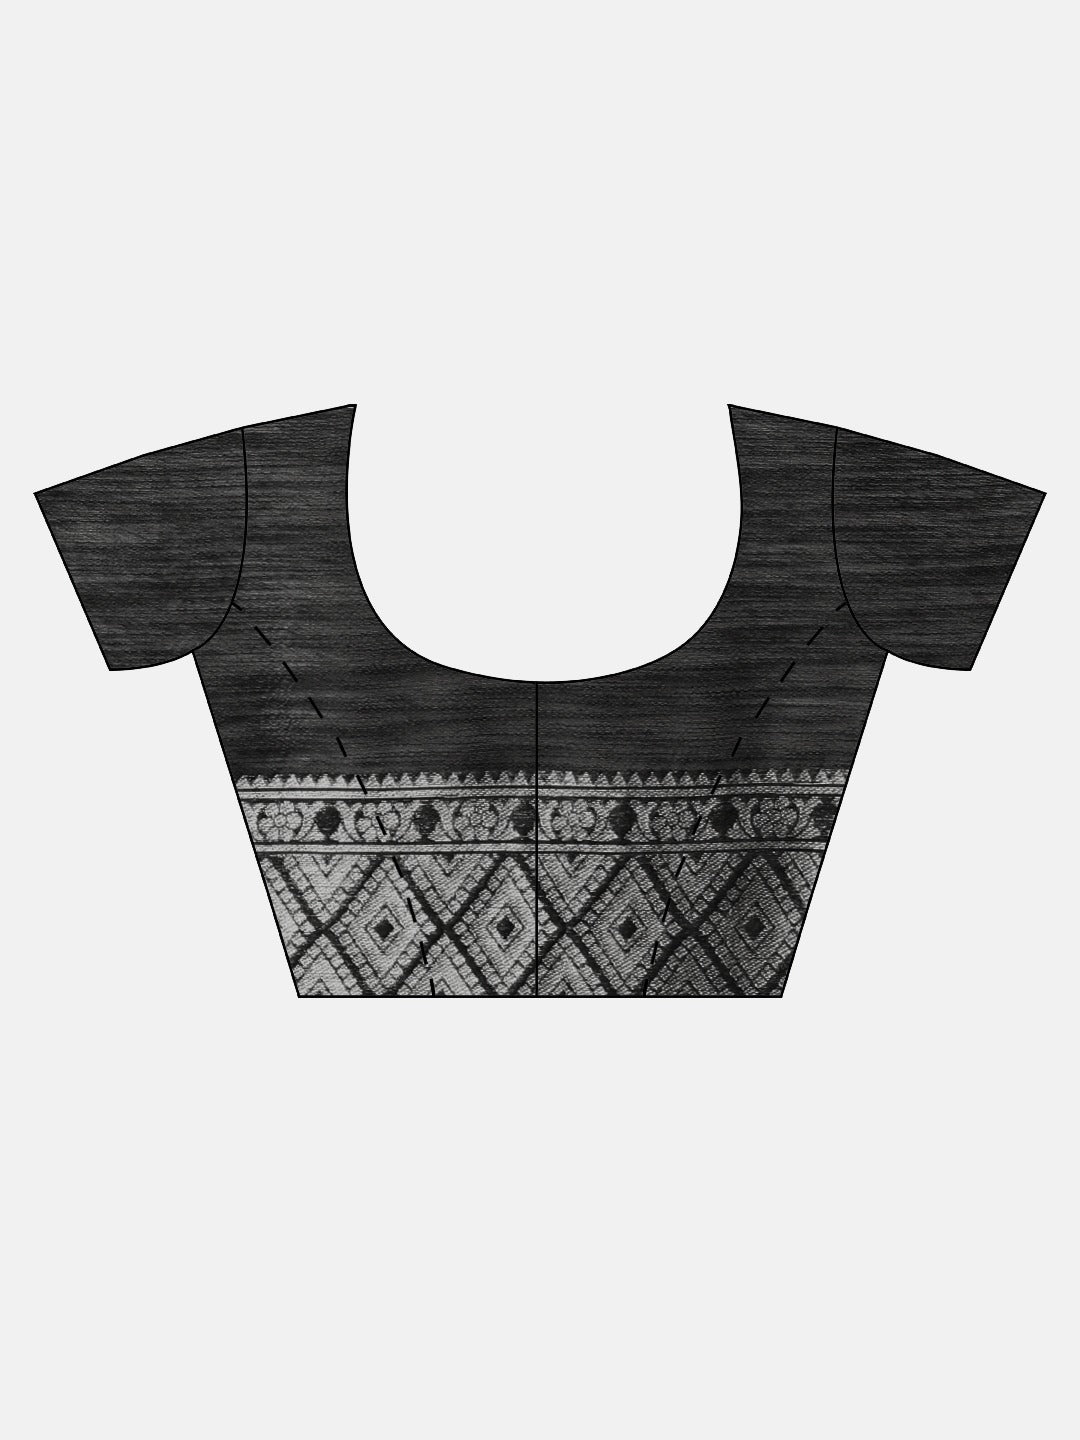 Stylish Black Colour Woven Design Cotton Saree